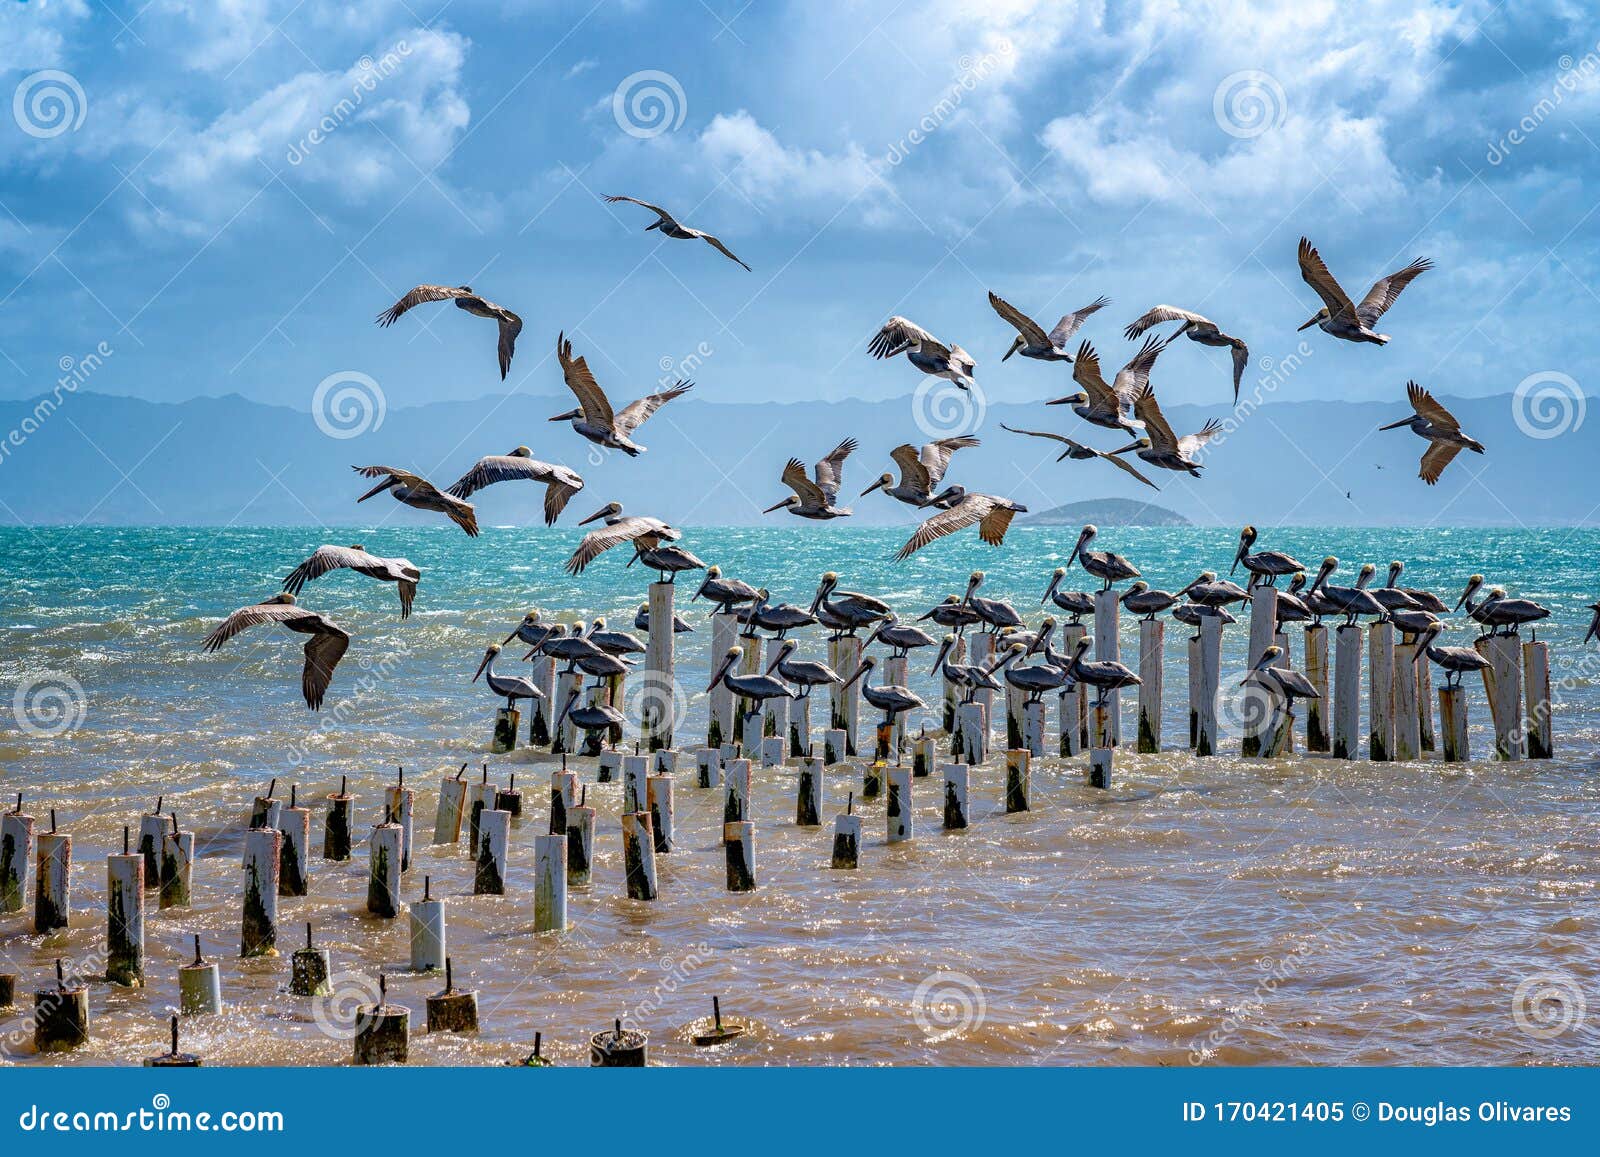 flock of pelicans at coche island in venezuela